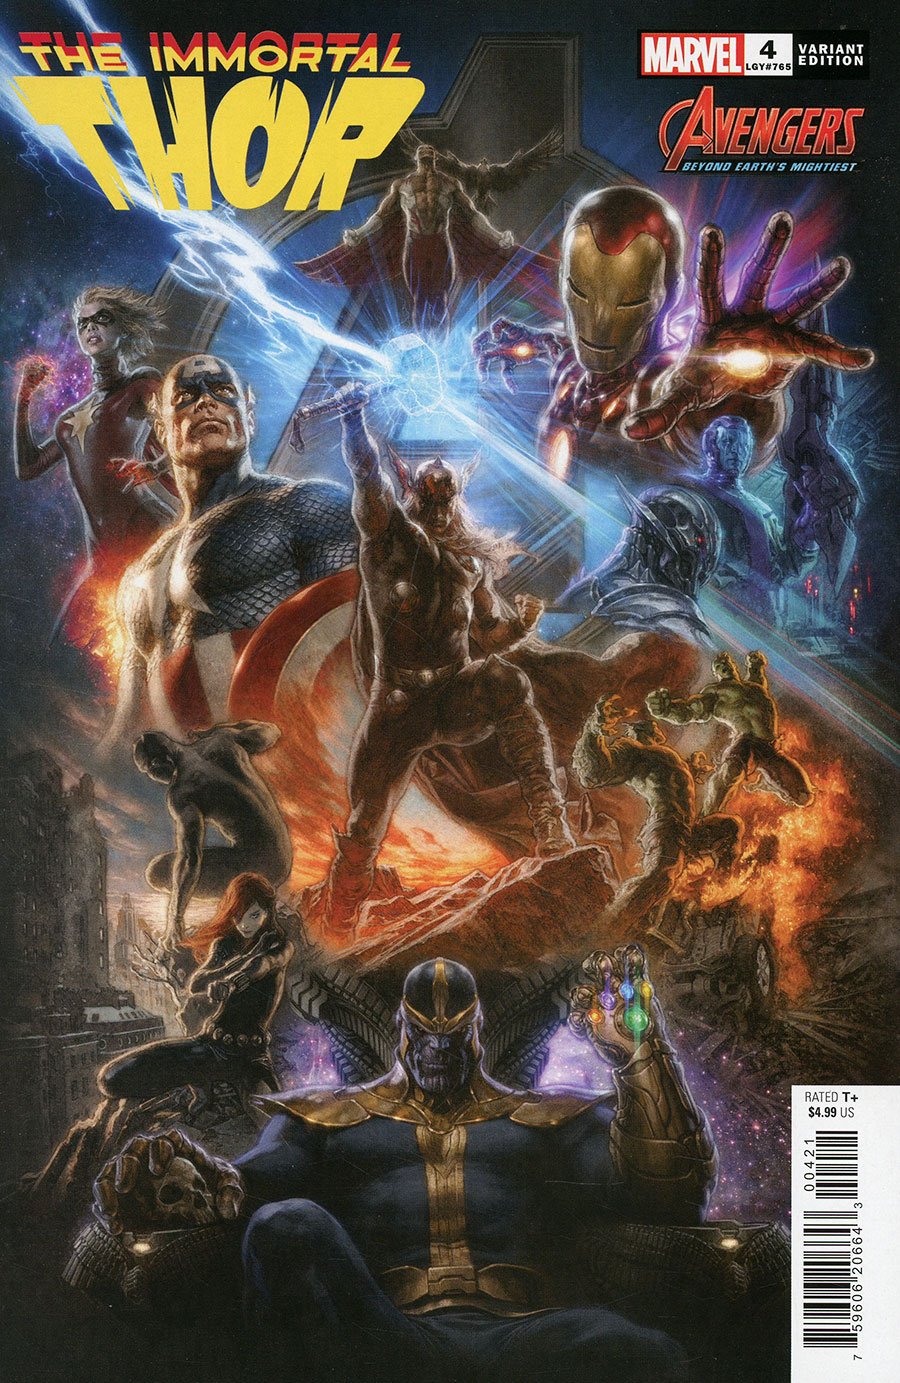 Immortal Thor #4 Cover B Variant Mauro Cascioli Avengers 60th Anniversary Cover